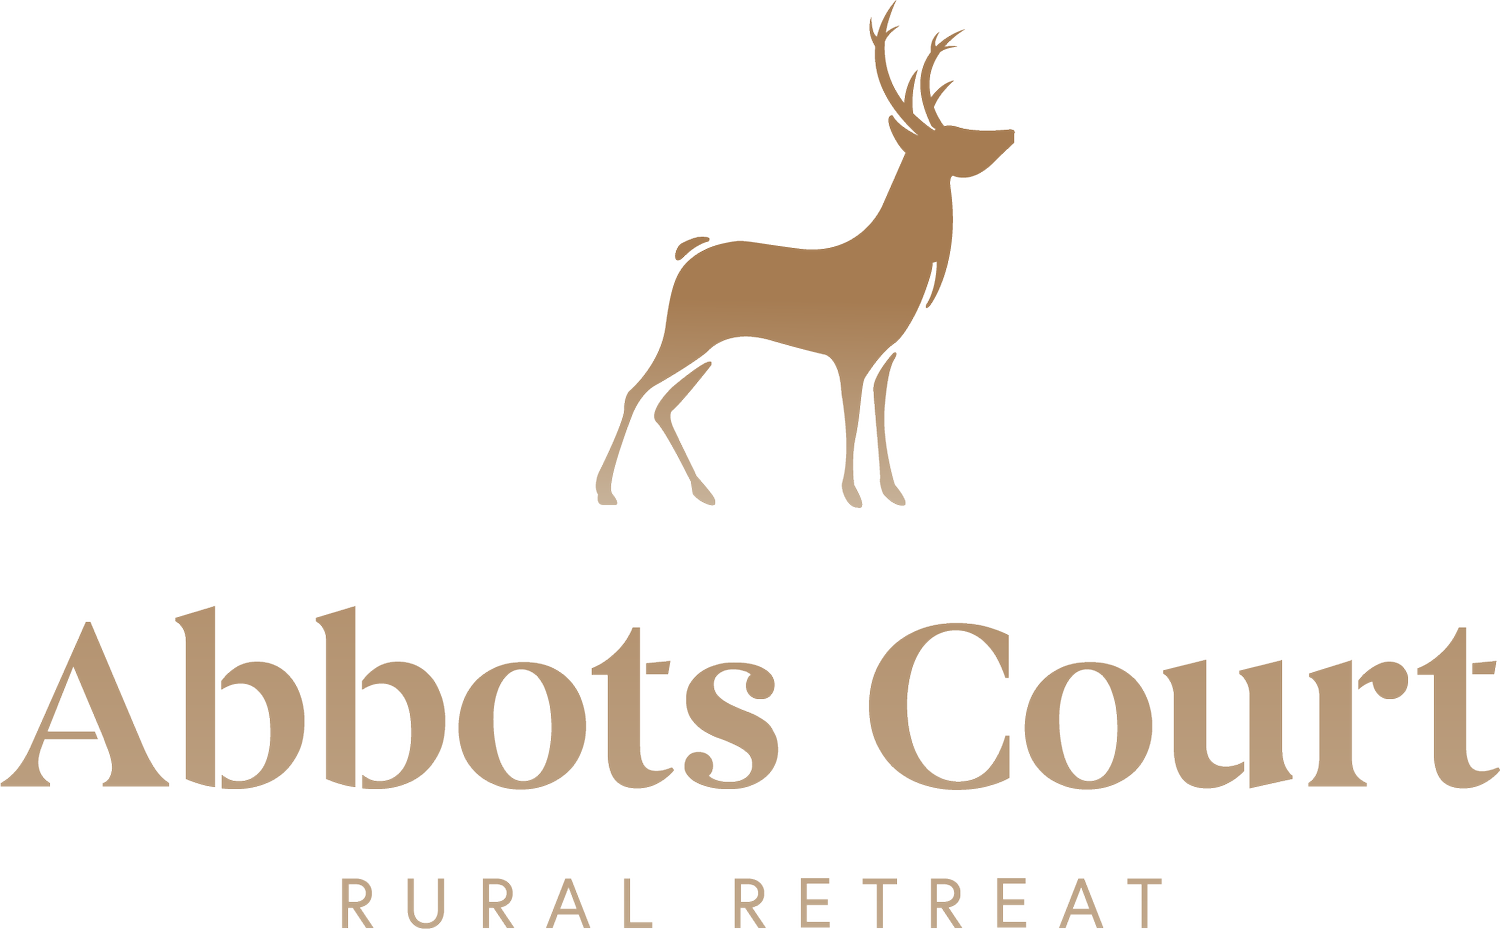 Abbots Court Rural Retreat &amp; Wedding Venue